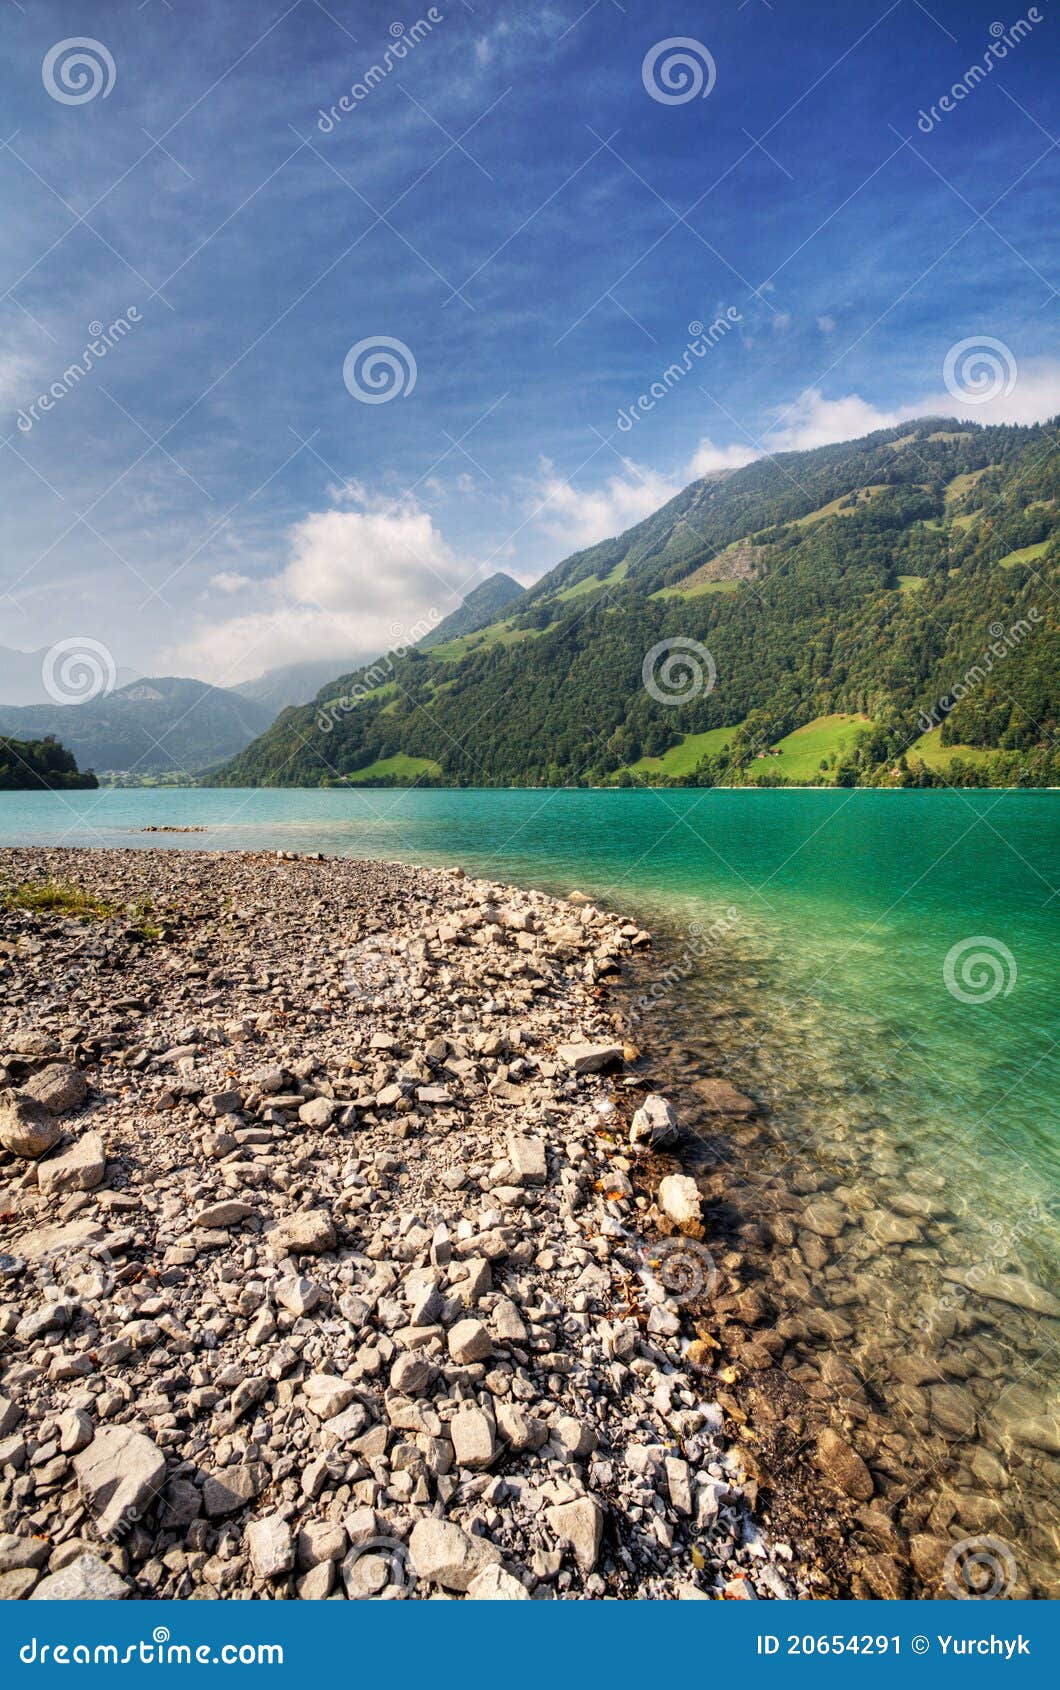 Beautiful Mountain Lake In Switzerland Stock Image Image Of